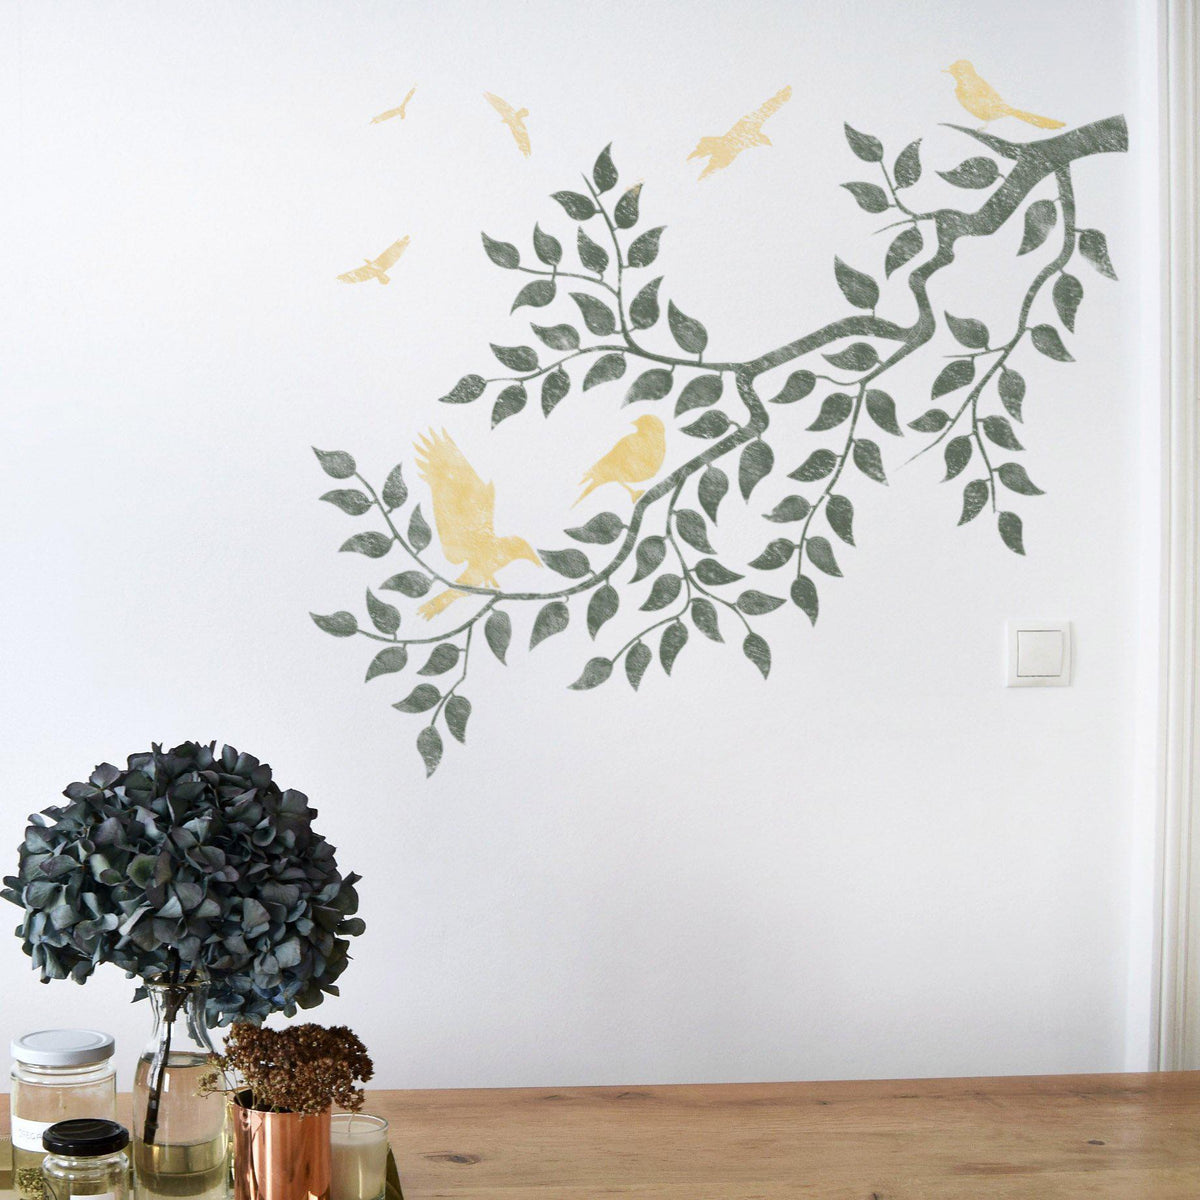 Wall Stencil - Birds On A Branch Wall Stencil - Original Floral Stenci ...